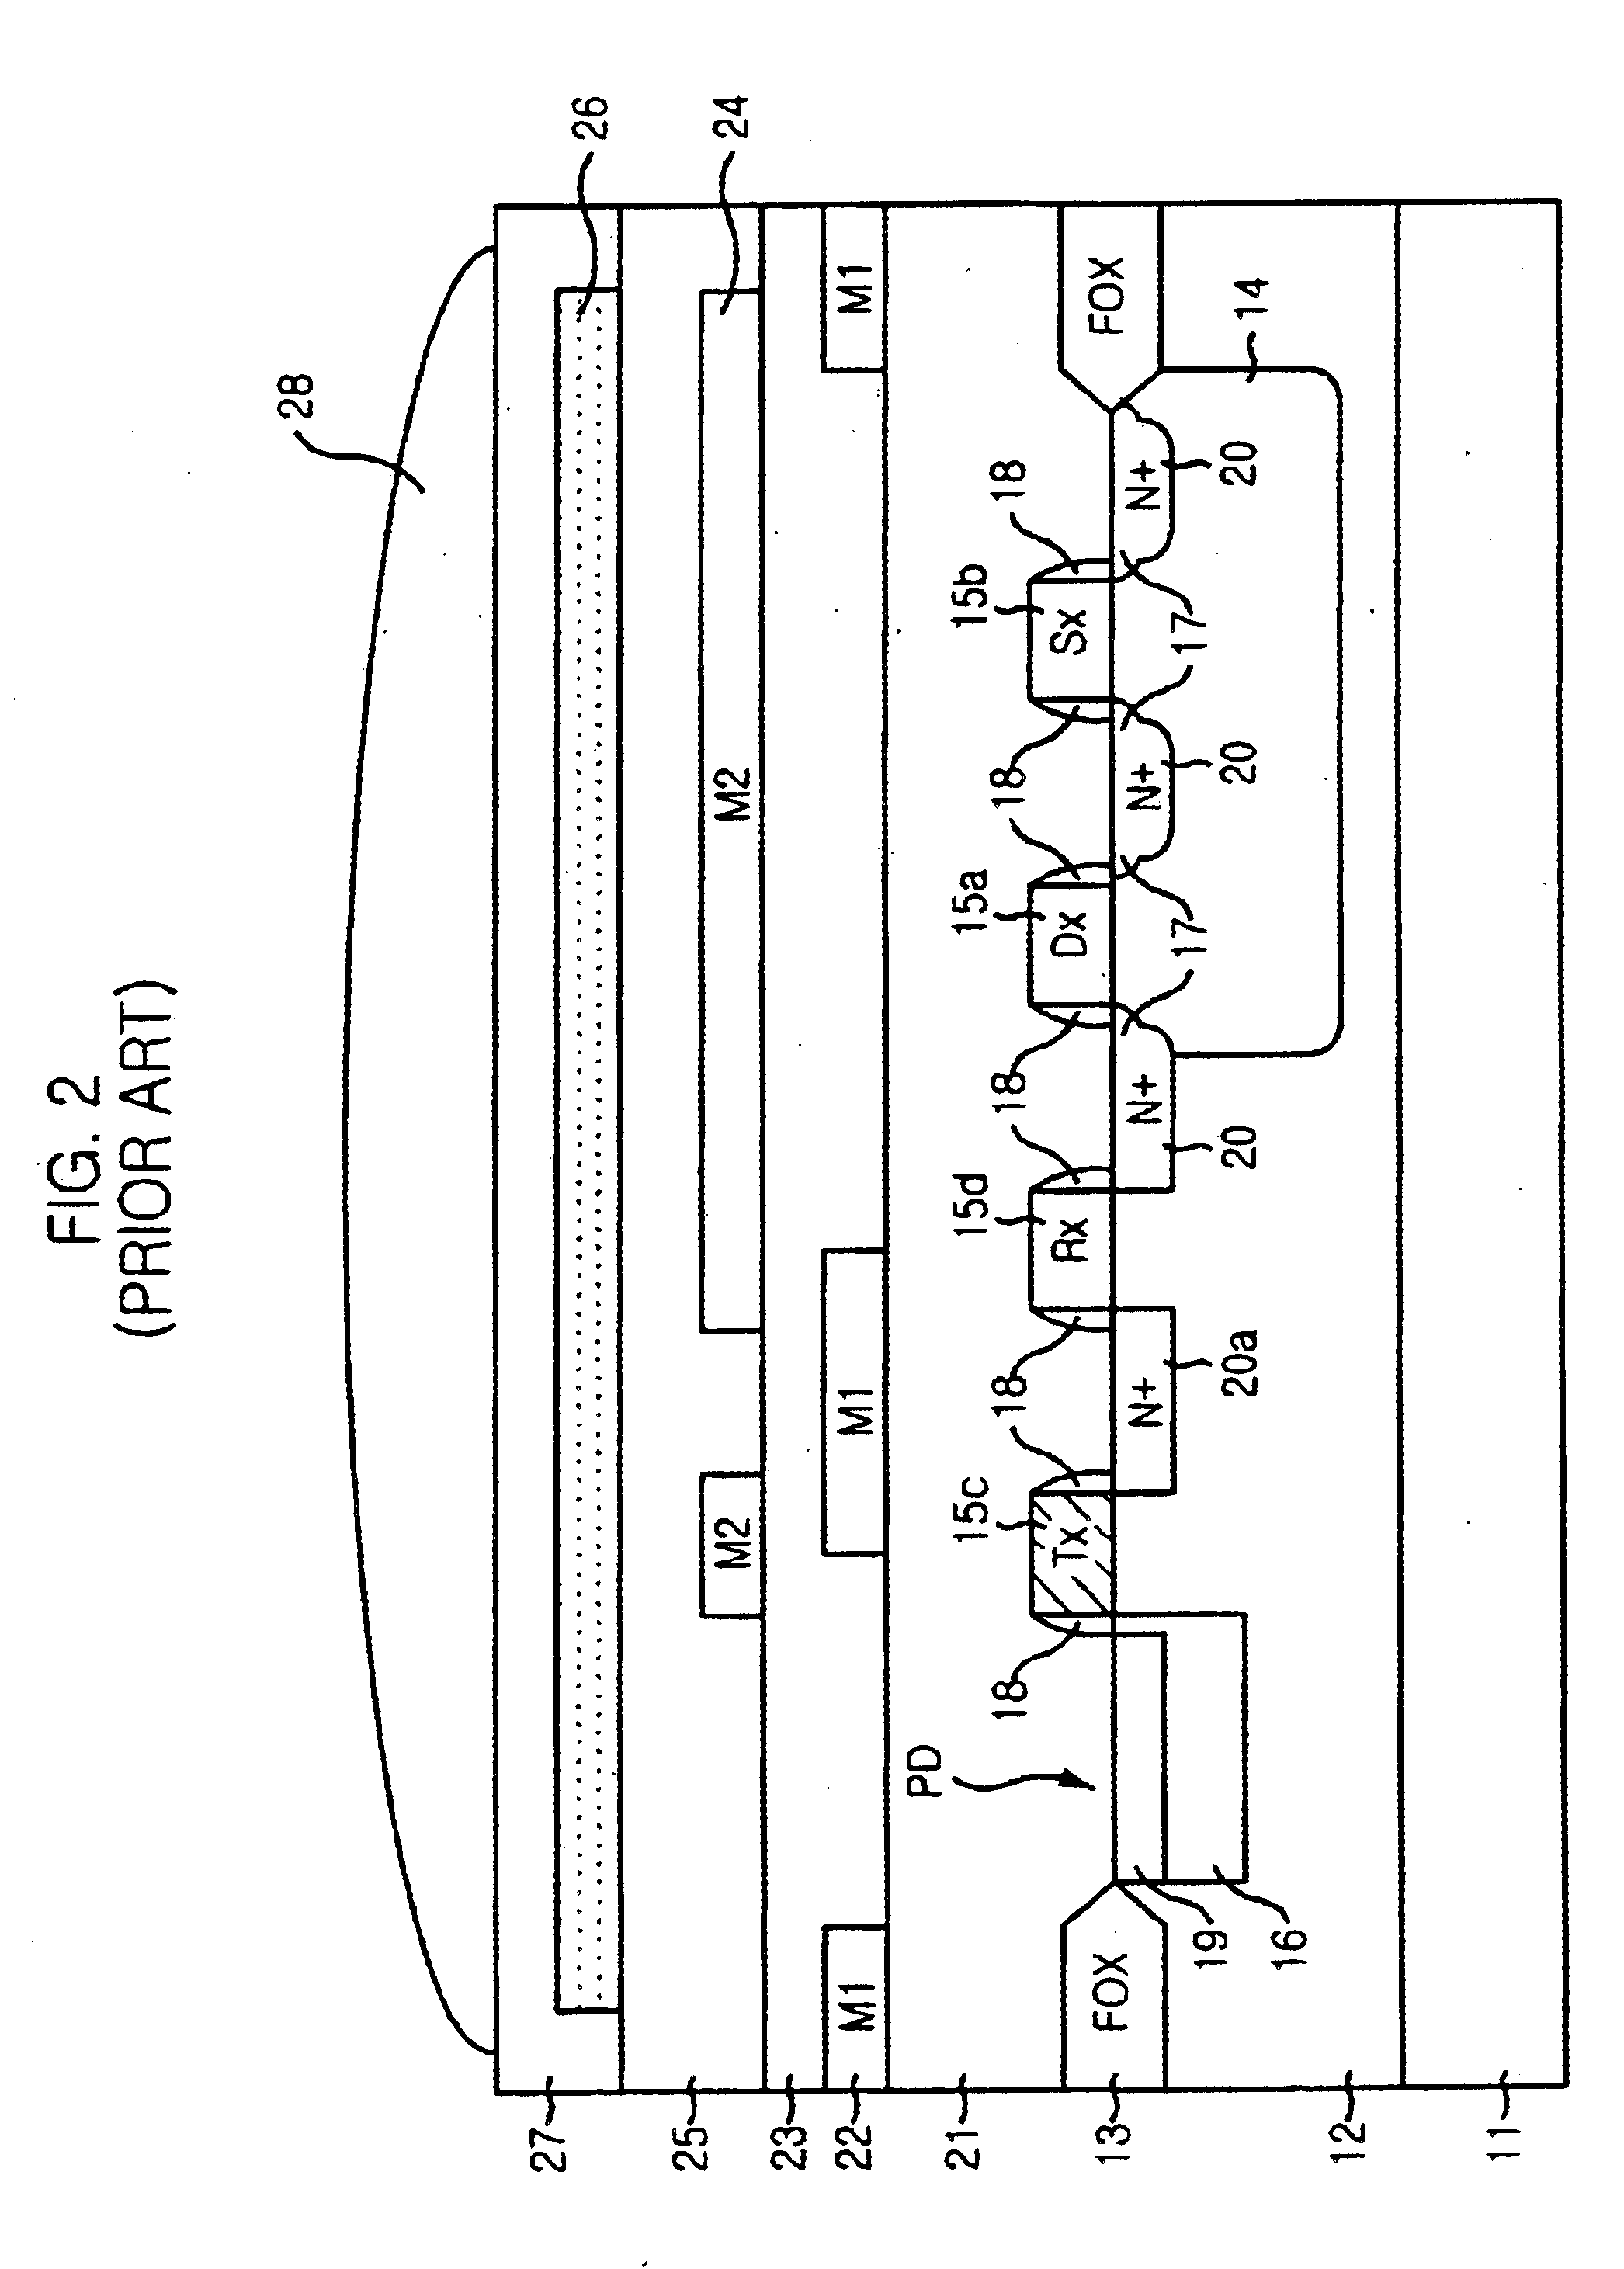 Method of manufacturing image sensor for reducing dark current